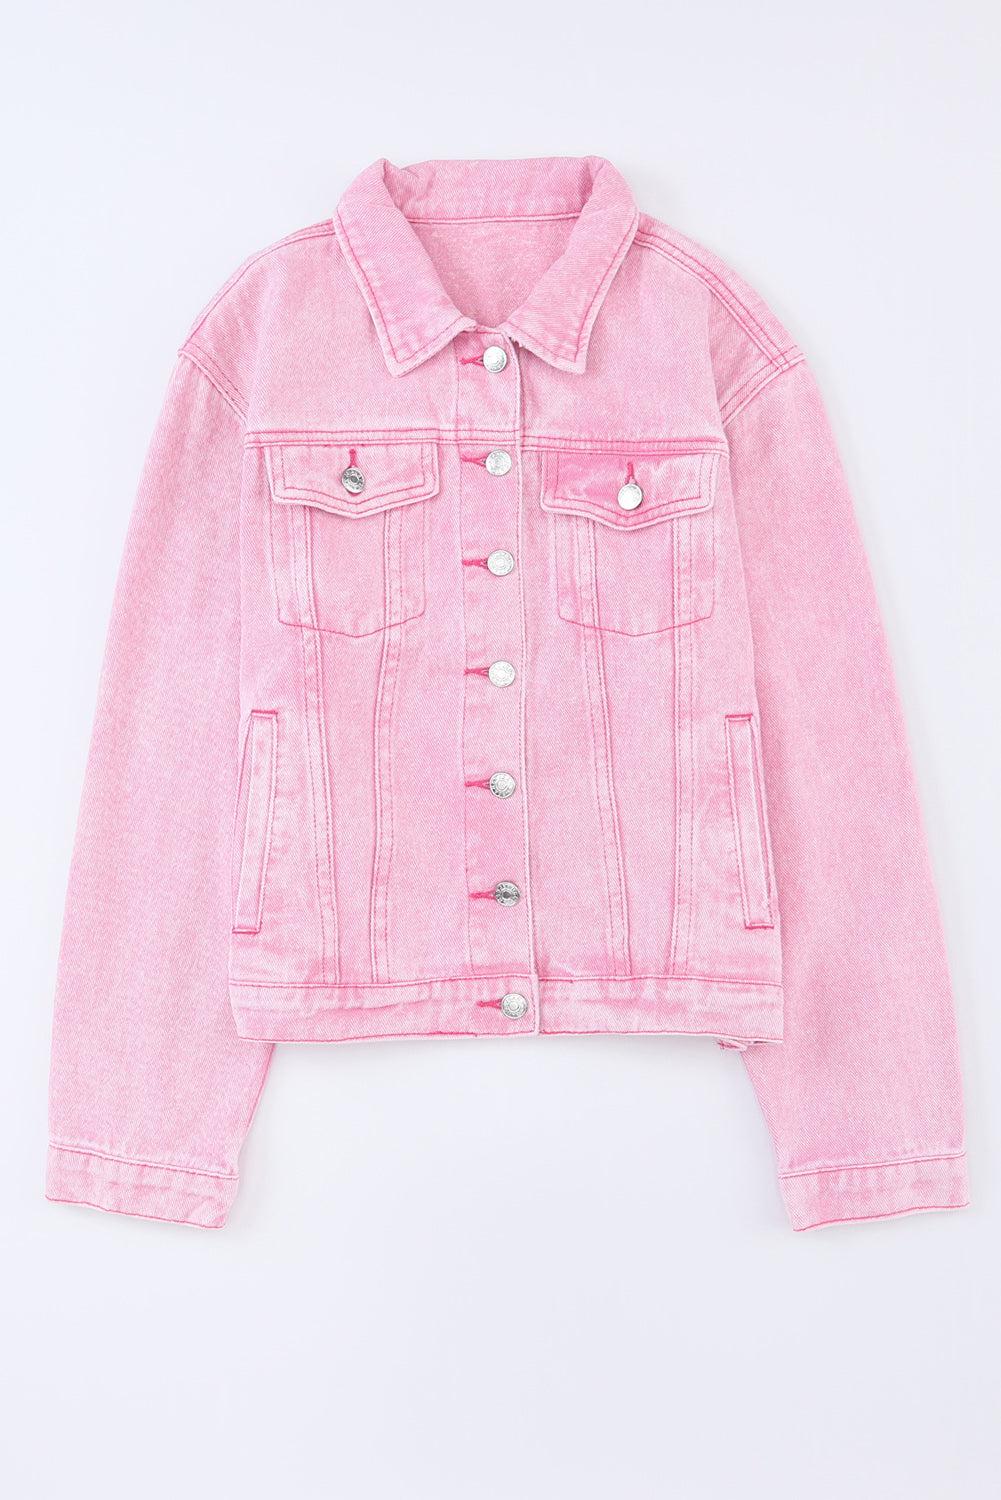 Blush Pink Pocketed Button Up Collared Neck Denim Jacket